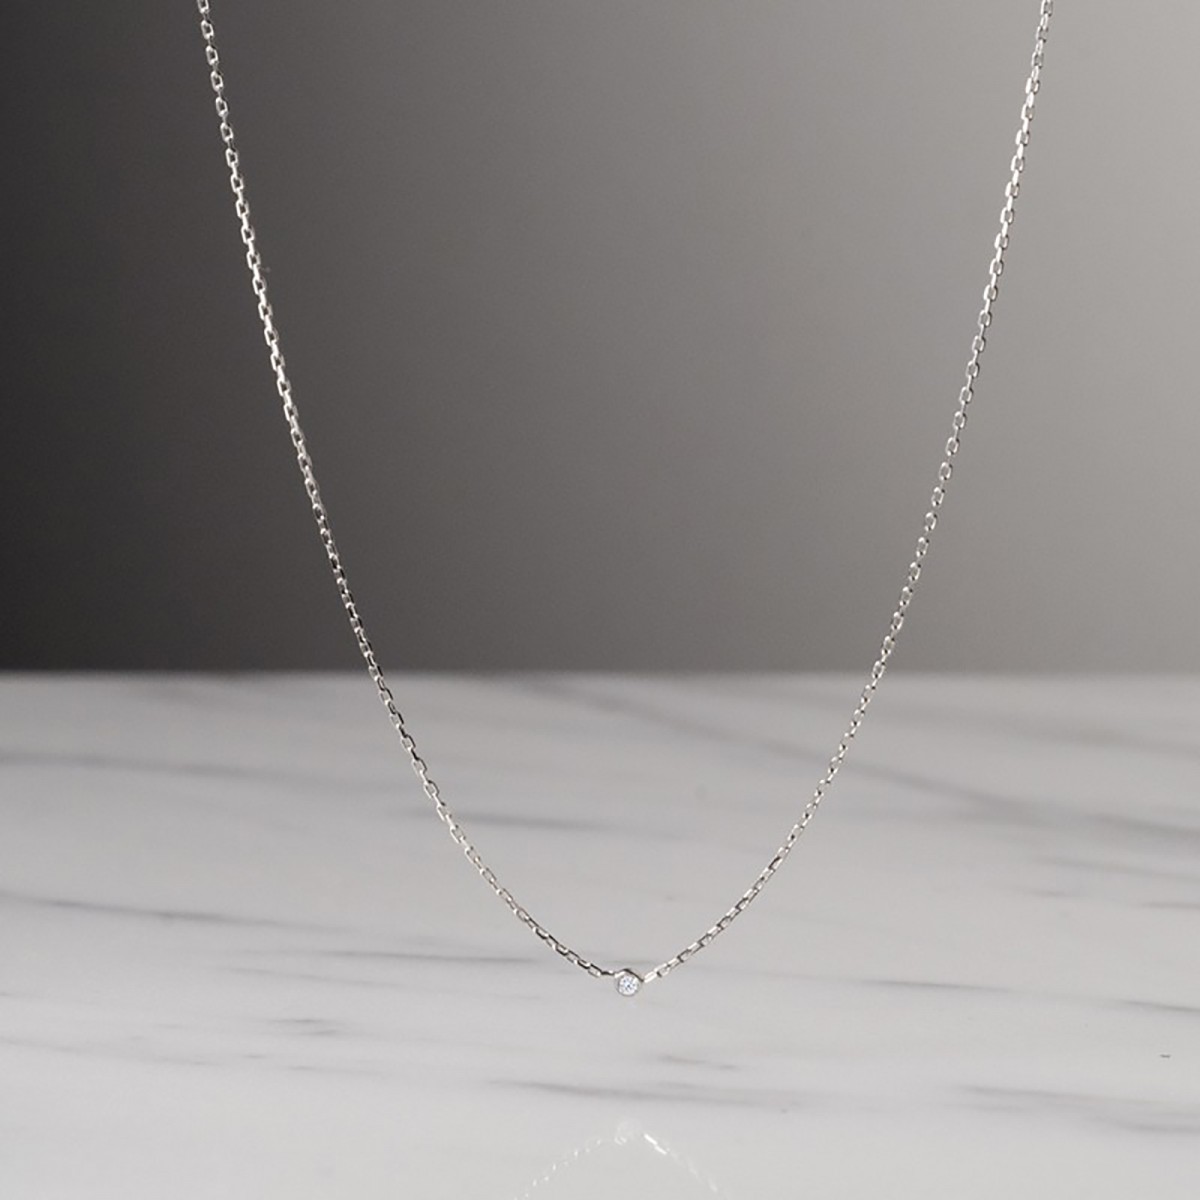 RIEN 1790 - Handmade necklace